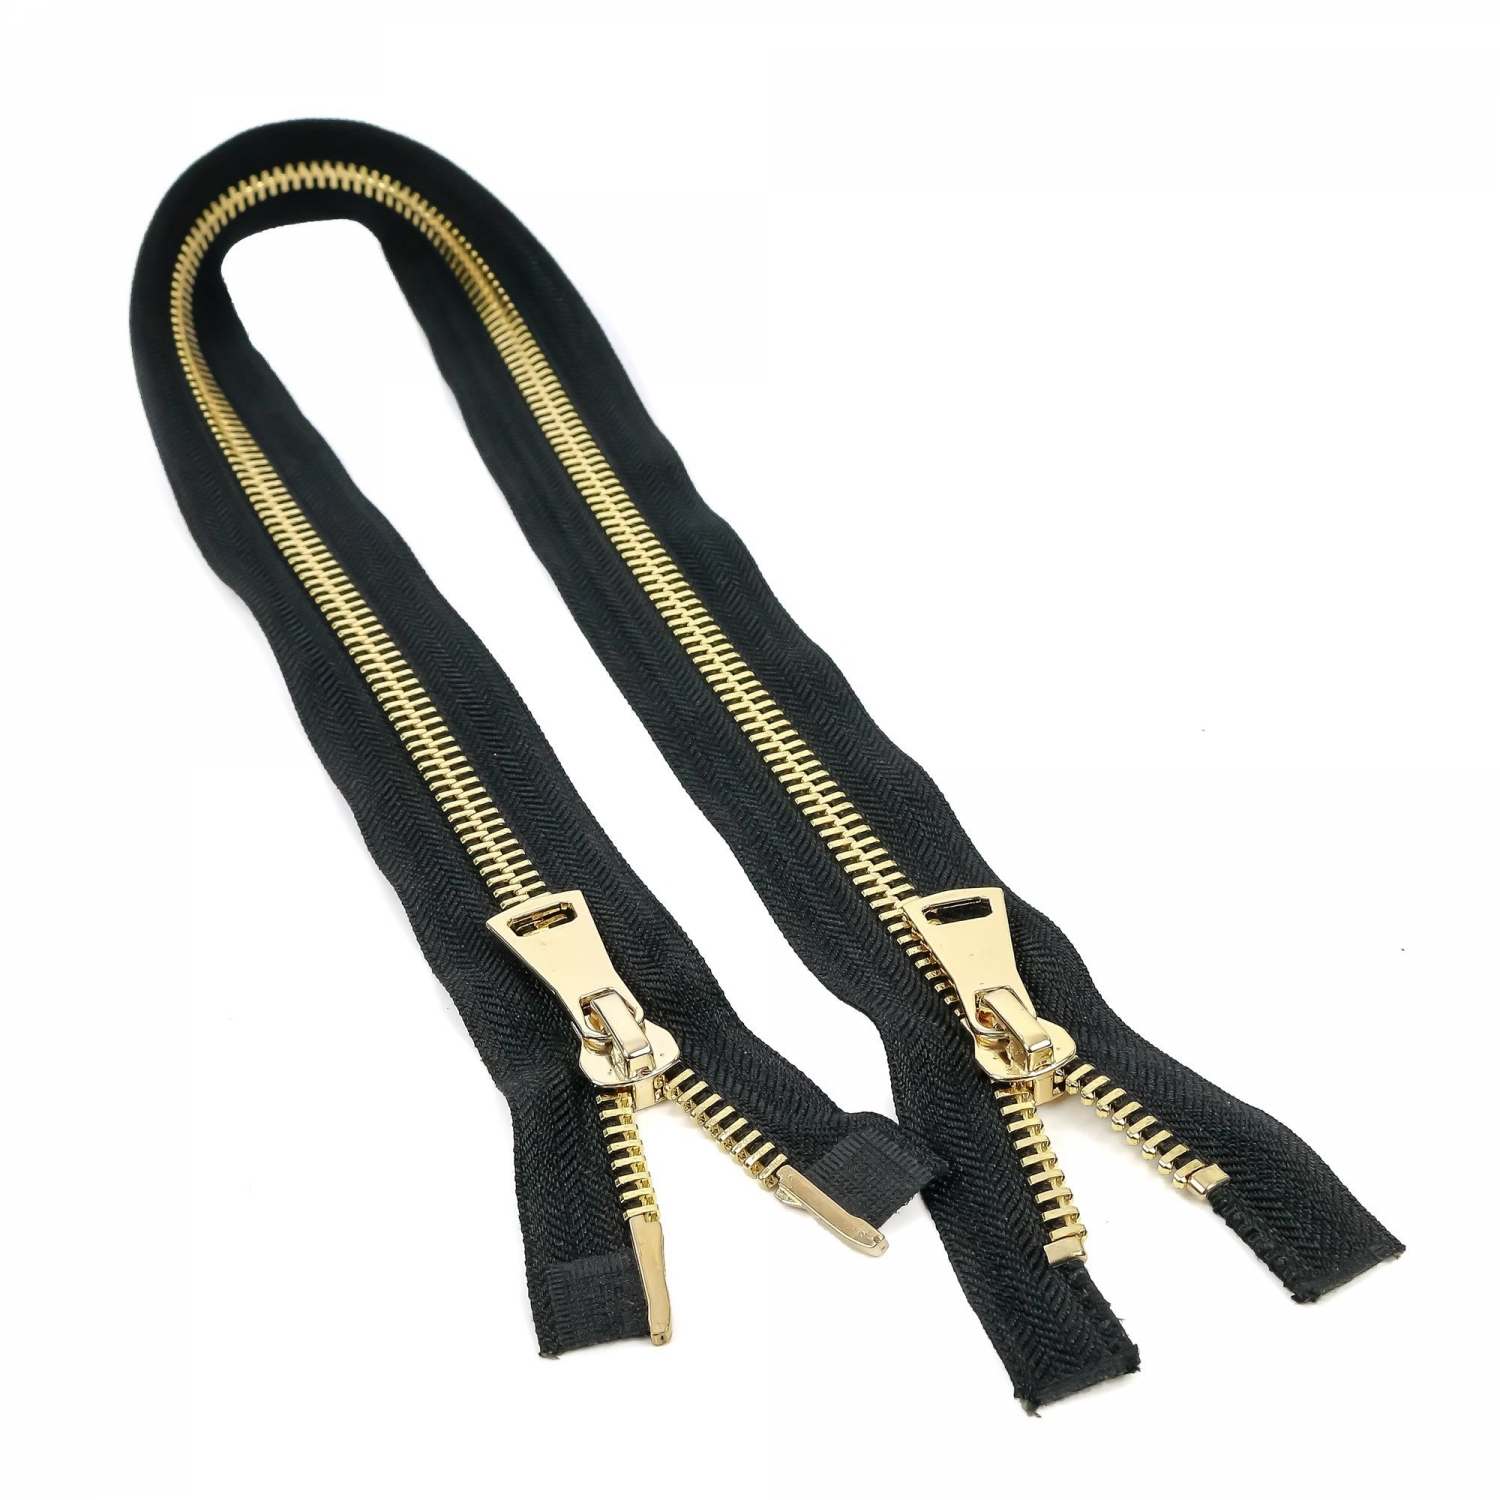 90 cm Metallic Zipper with 2 Sliders with 10 mm Teeth (1 pcs)